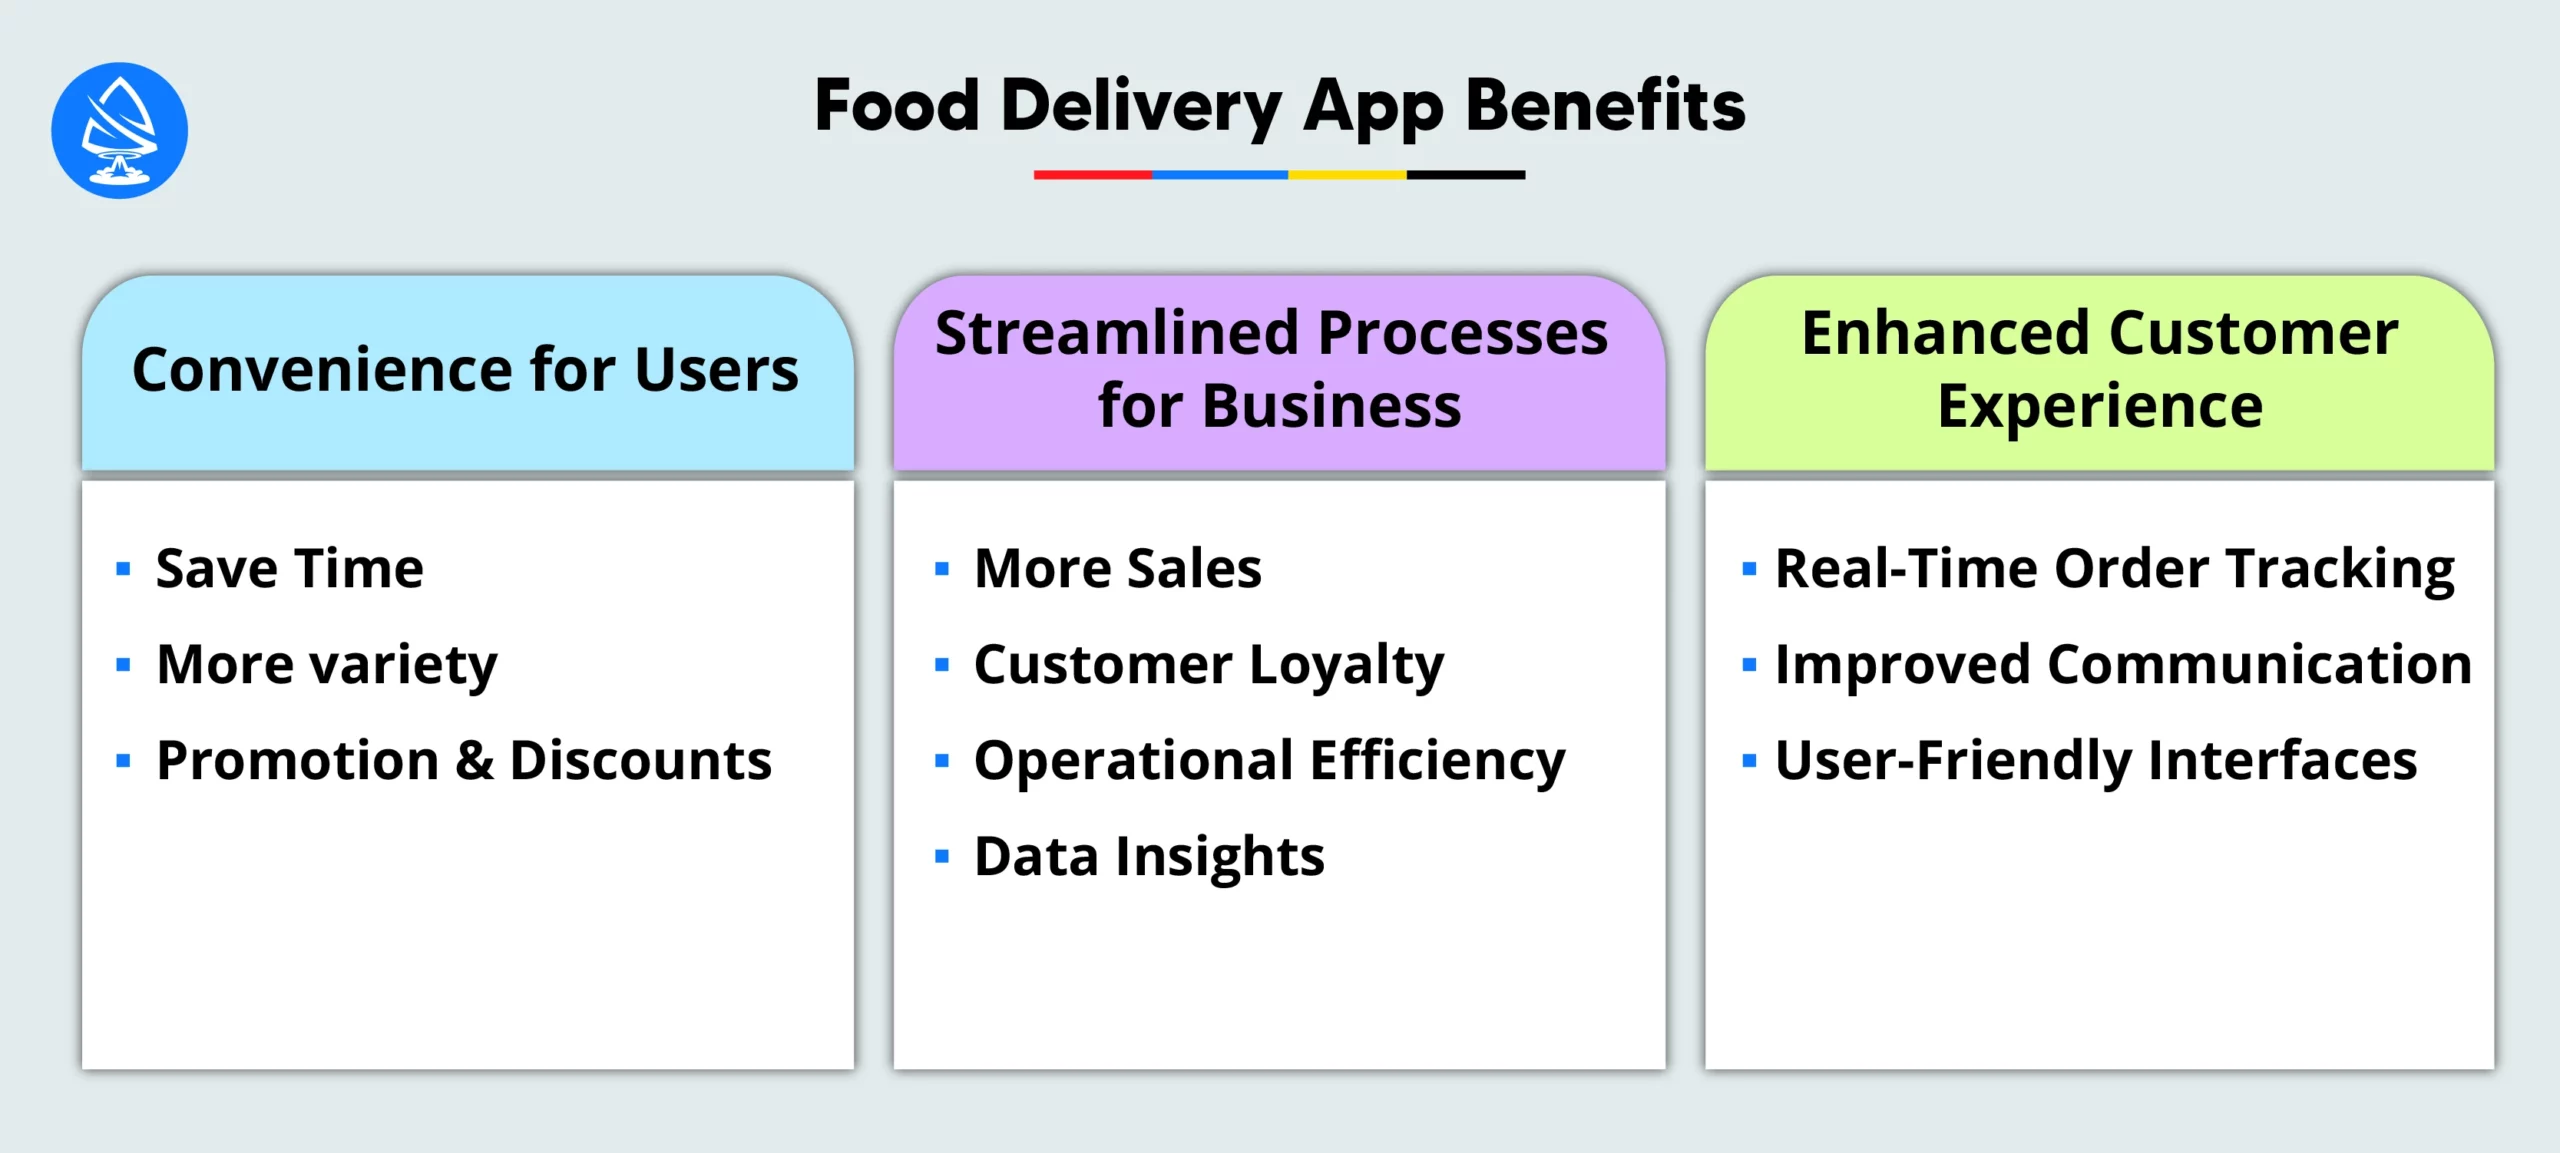 Food Delivery App Benefits